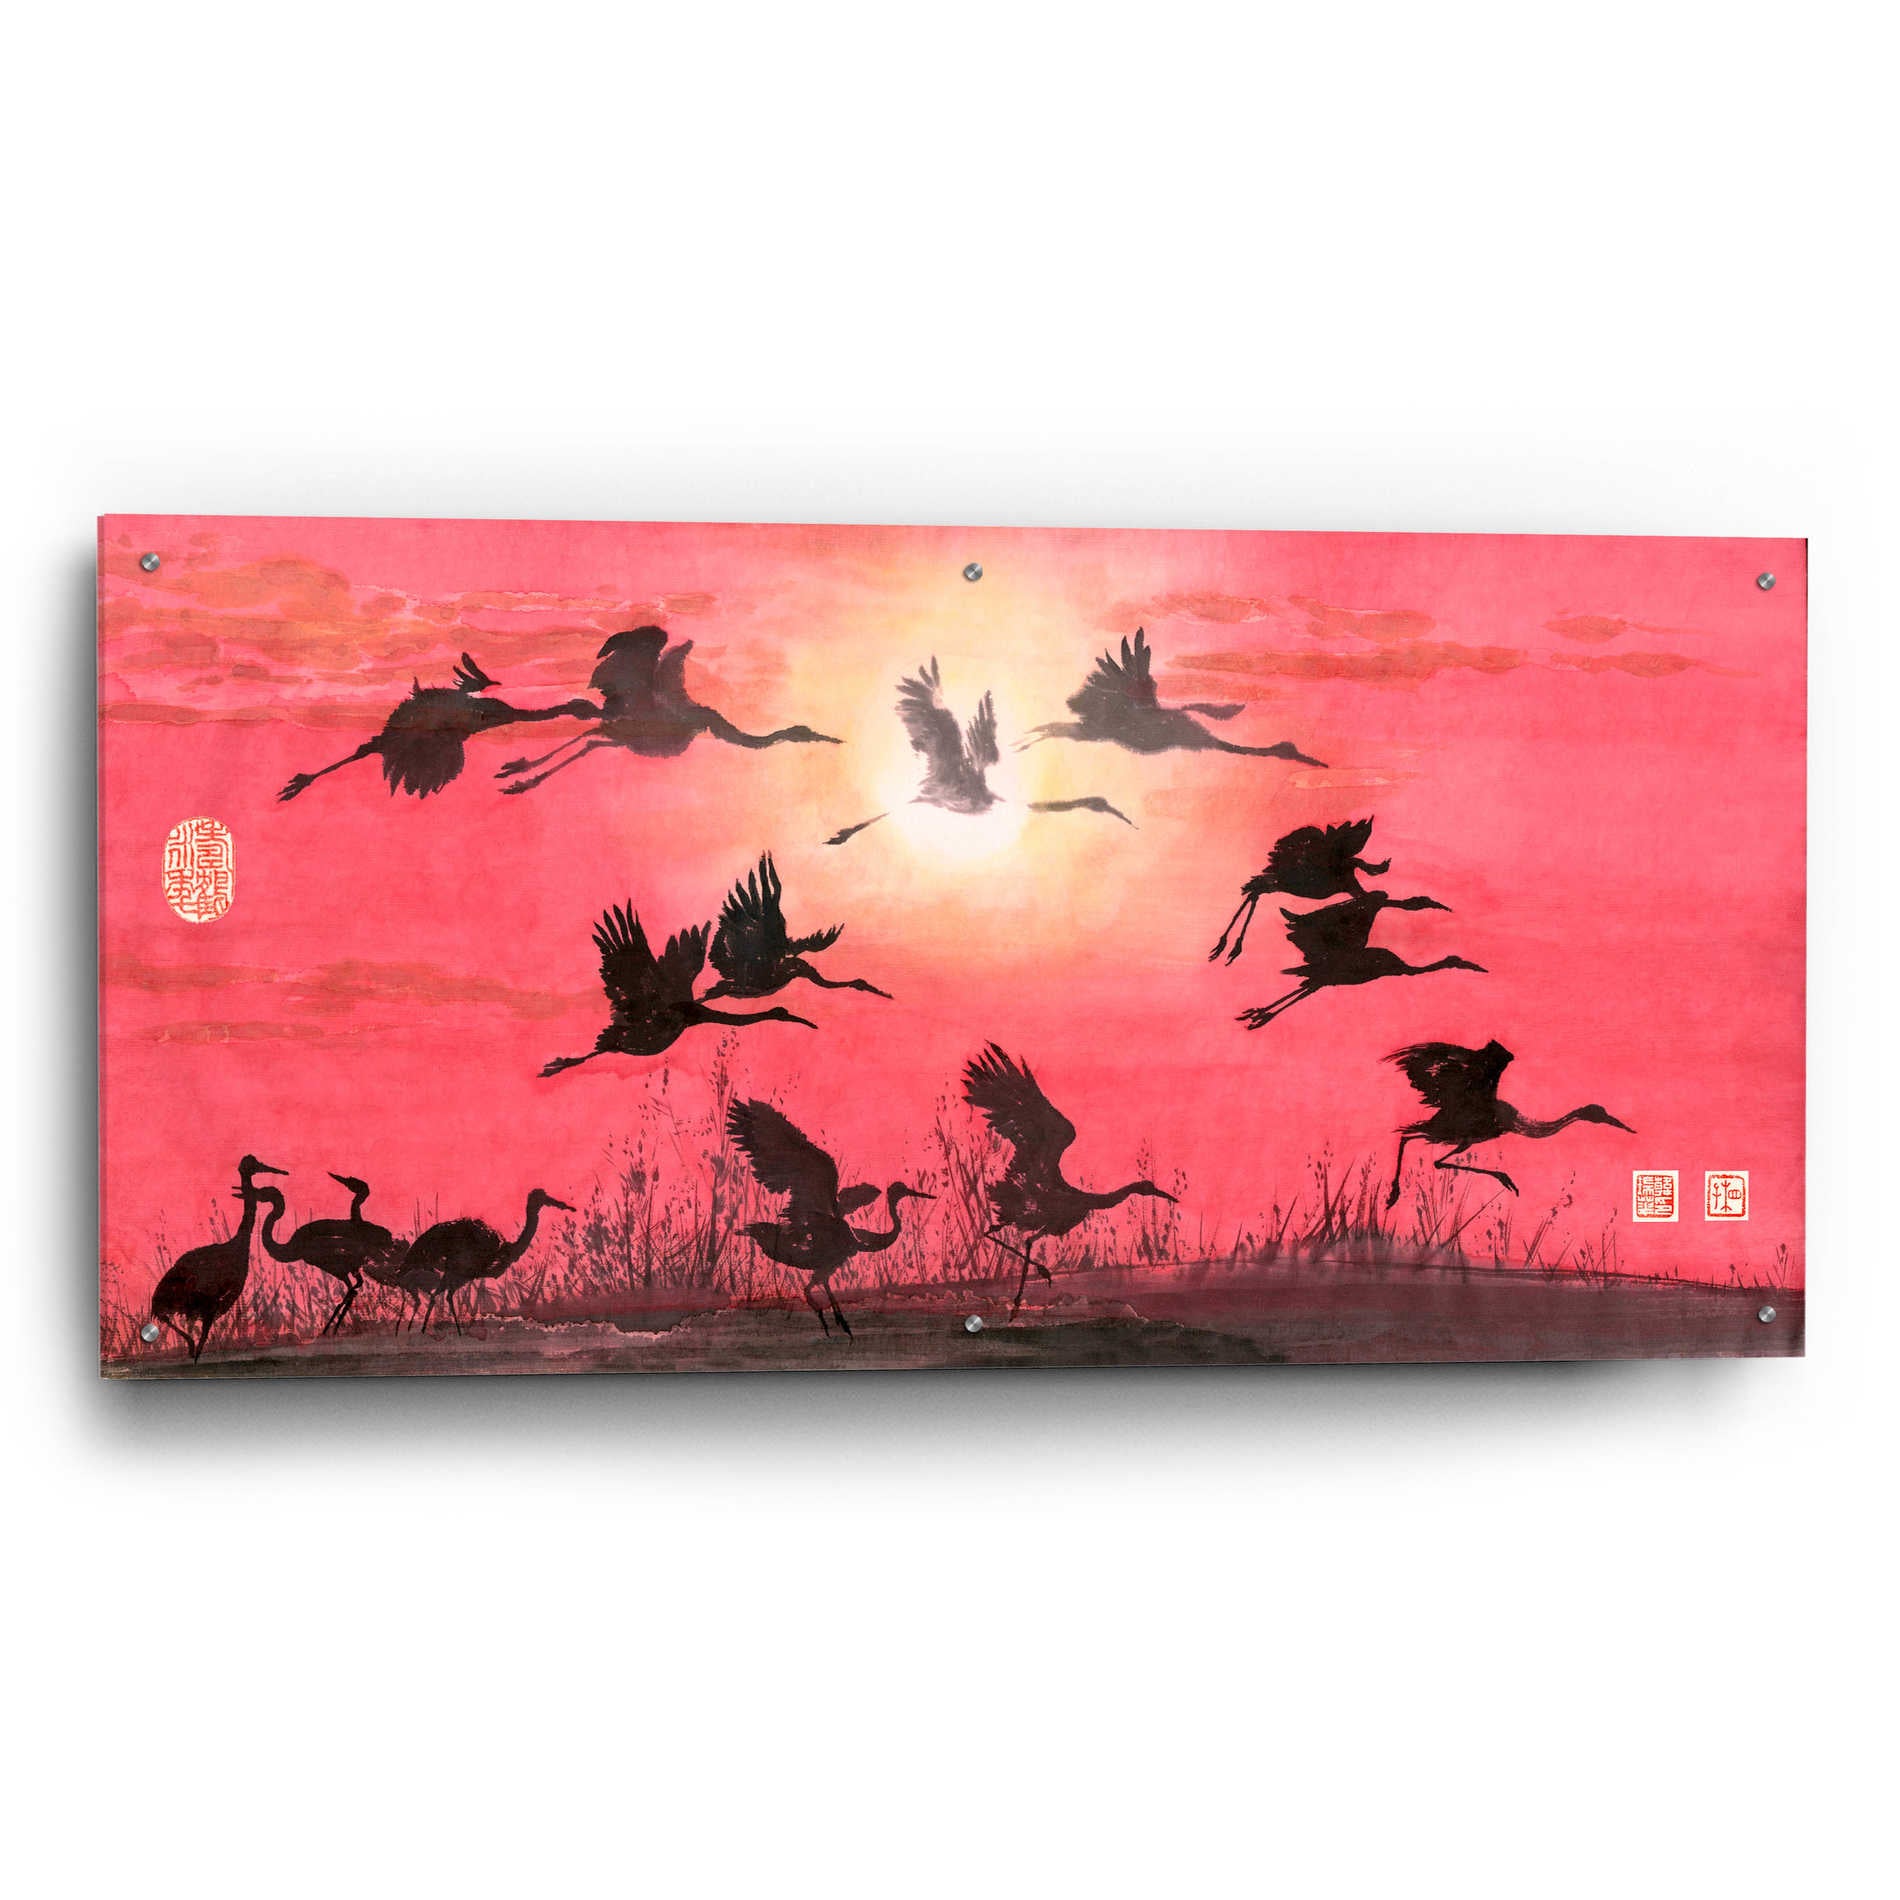 Epic Art 'Siege of Cranes' by River Han, Acrylic Glass Wall Art,48x24